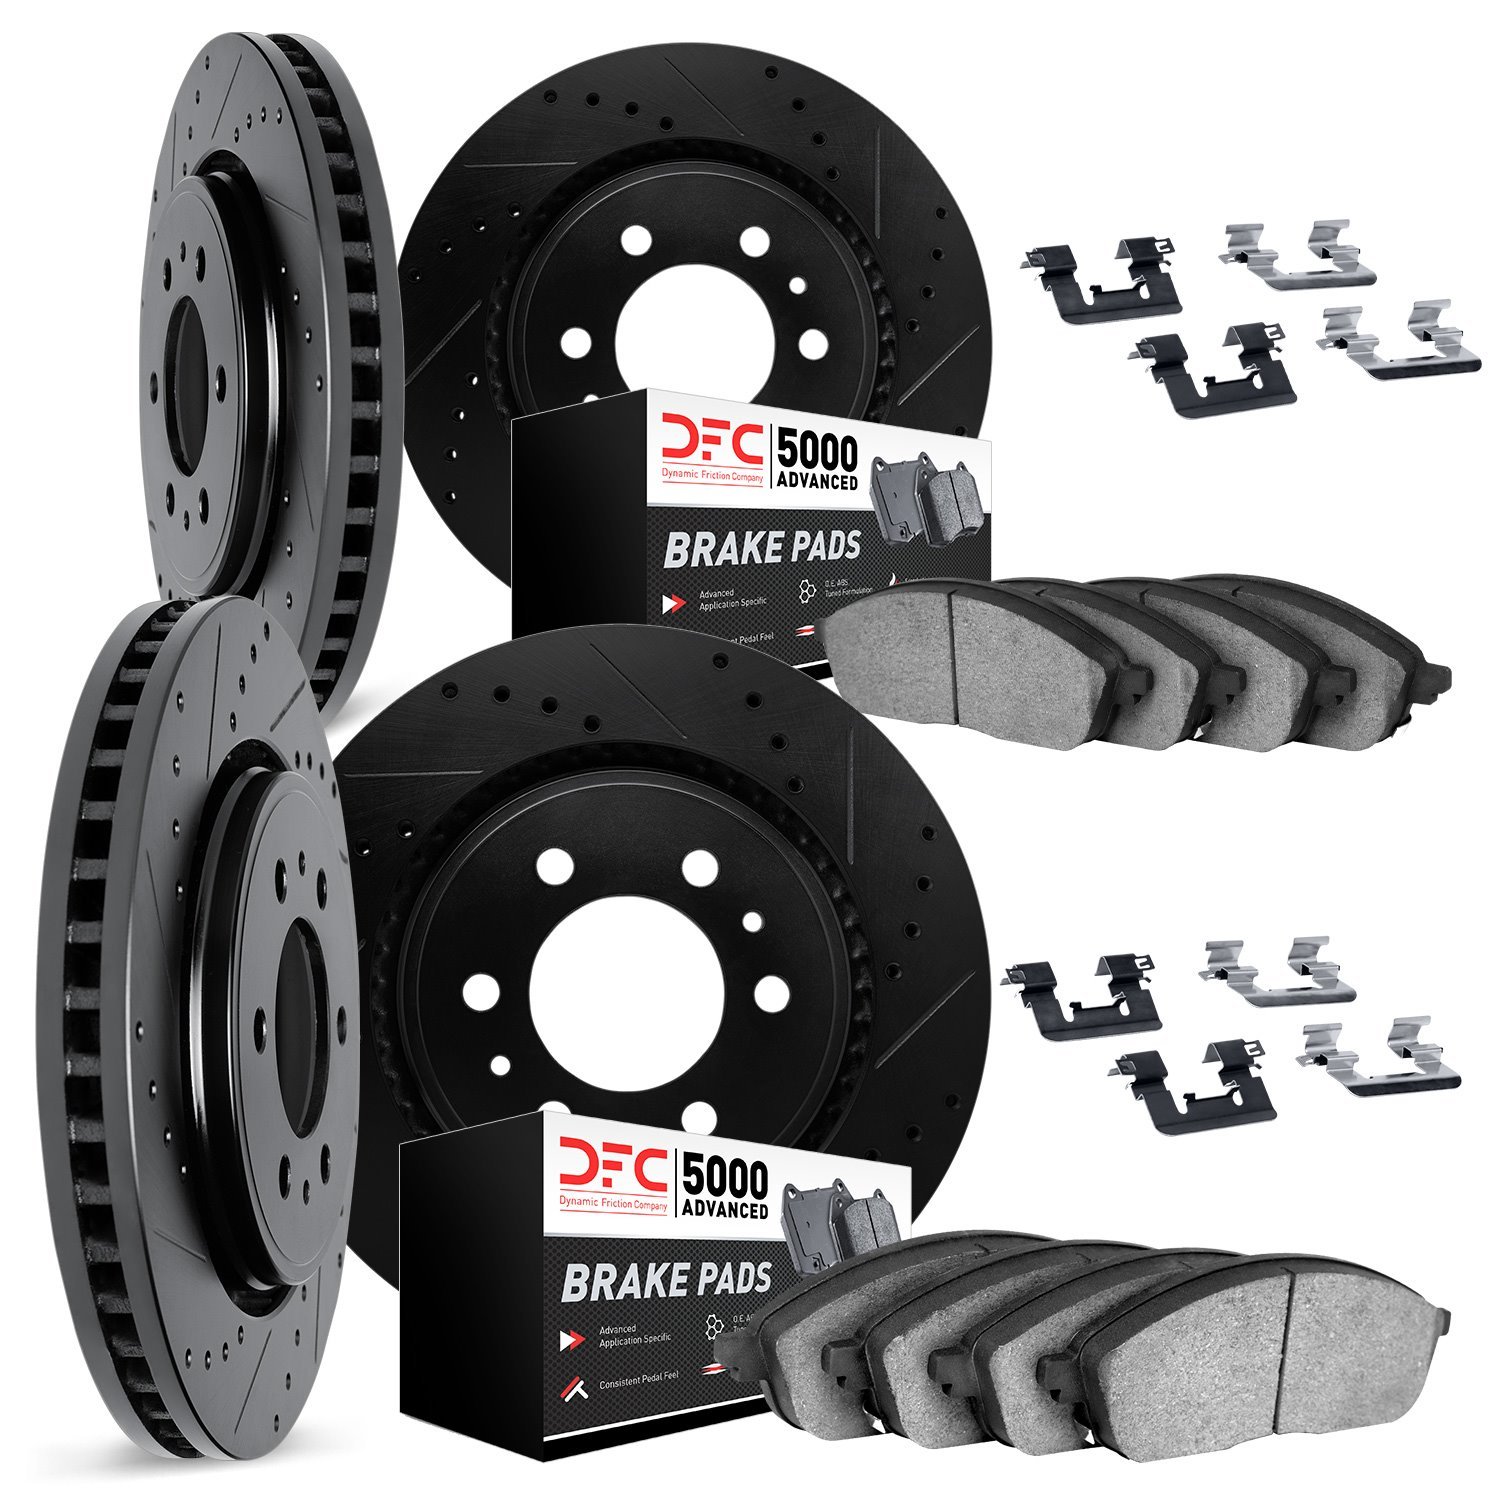 8514-67057 Drilled/Slotted Brake Rotors w/5000 Advanced Brake Pads Kit & Hardware [Black], Fits Select Multiple Makes/Models, Po